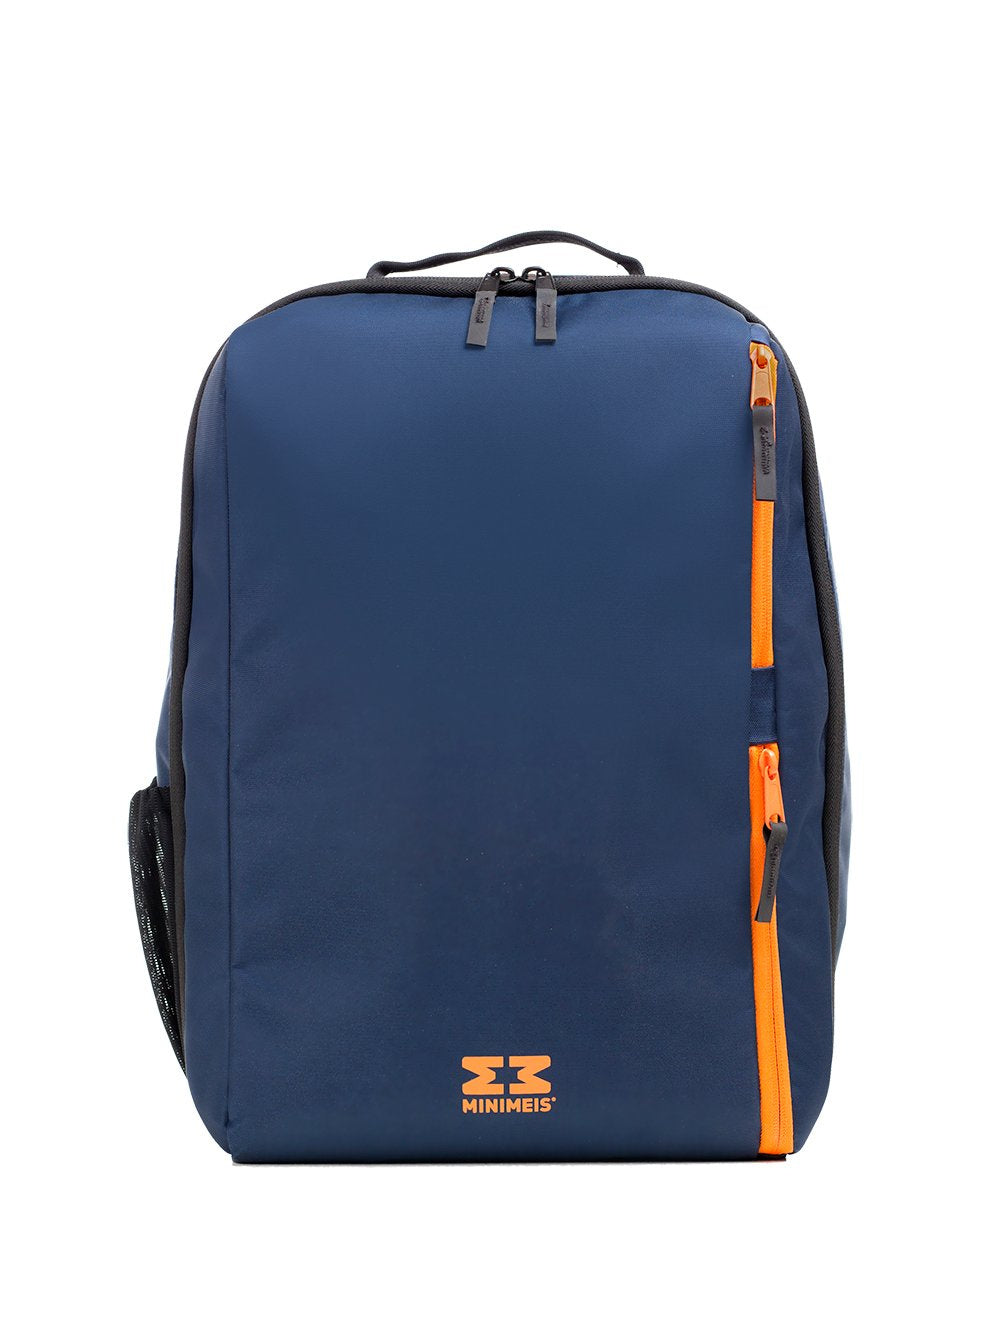 Minimeis - backpack - Navy